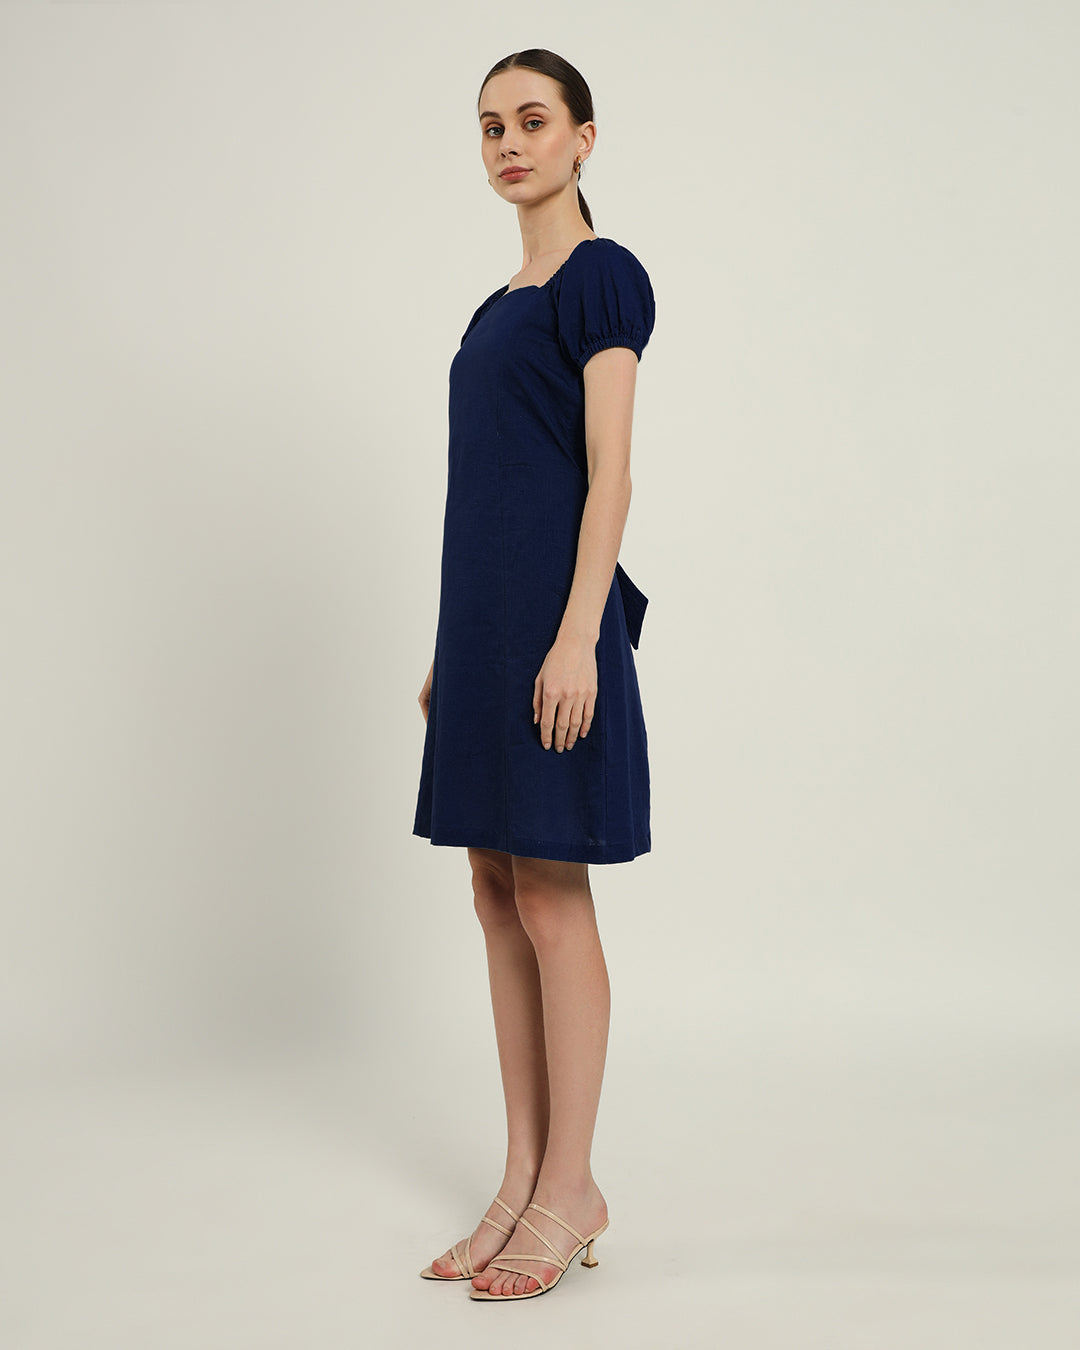 The Arar Daisy Midnight Blue Linen Dress